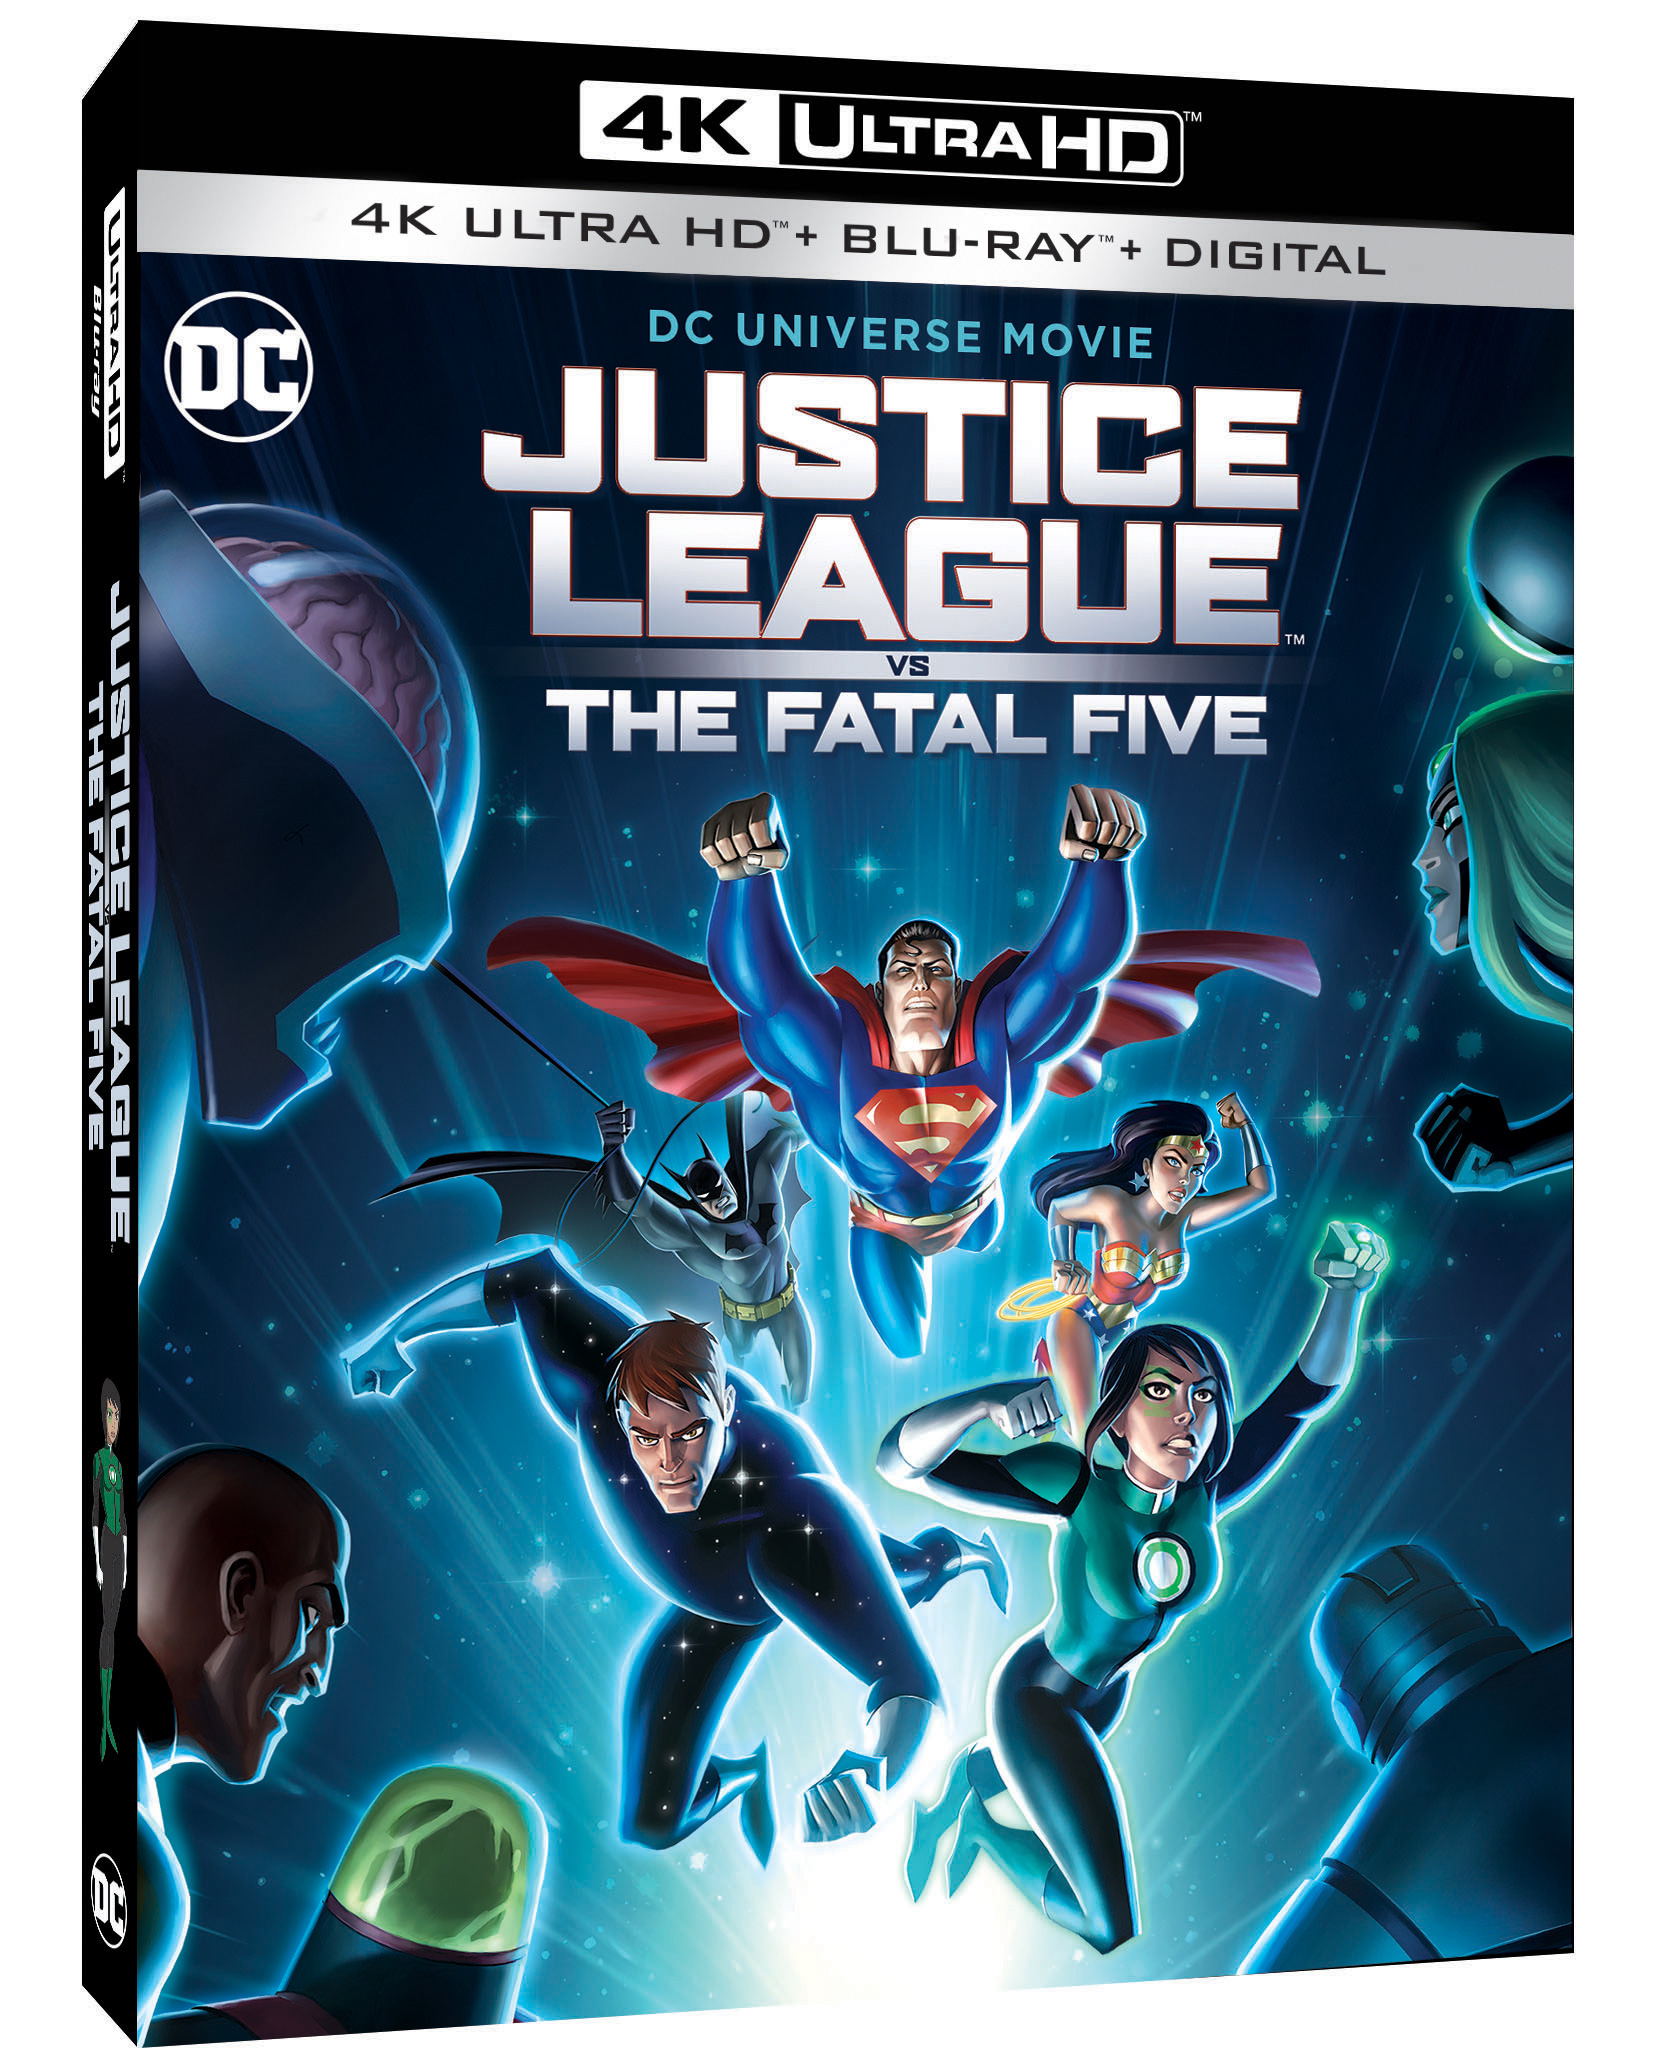 Justice League vs The Fatal Five Blu-ray 4K Ultra HD